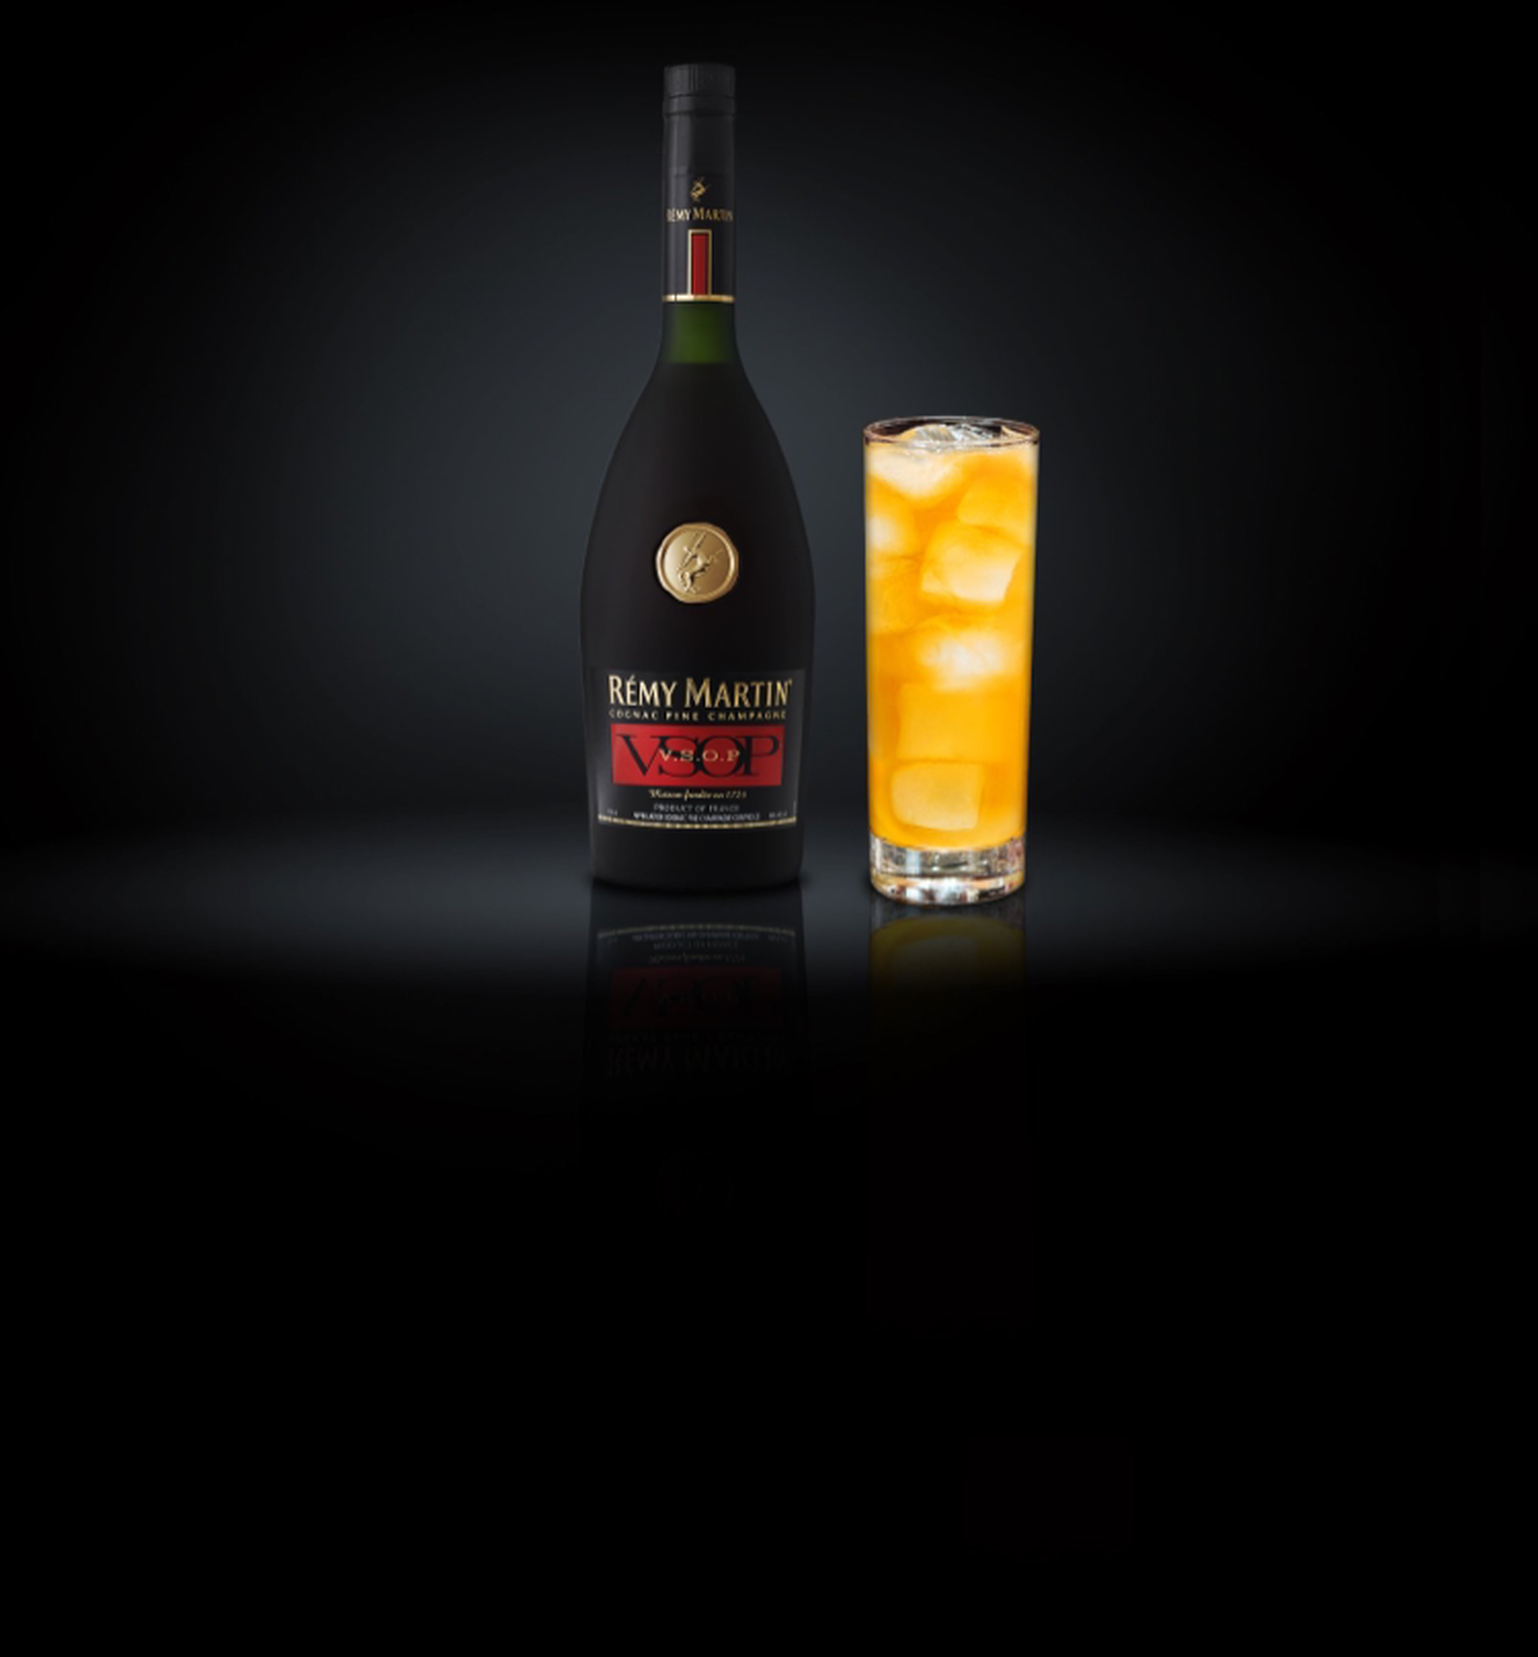 The Rémy Martin Ginger Cocktail